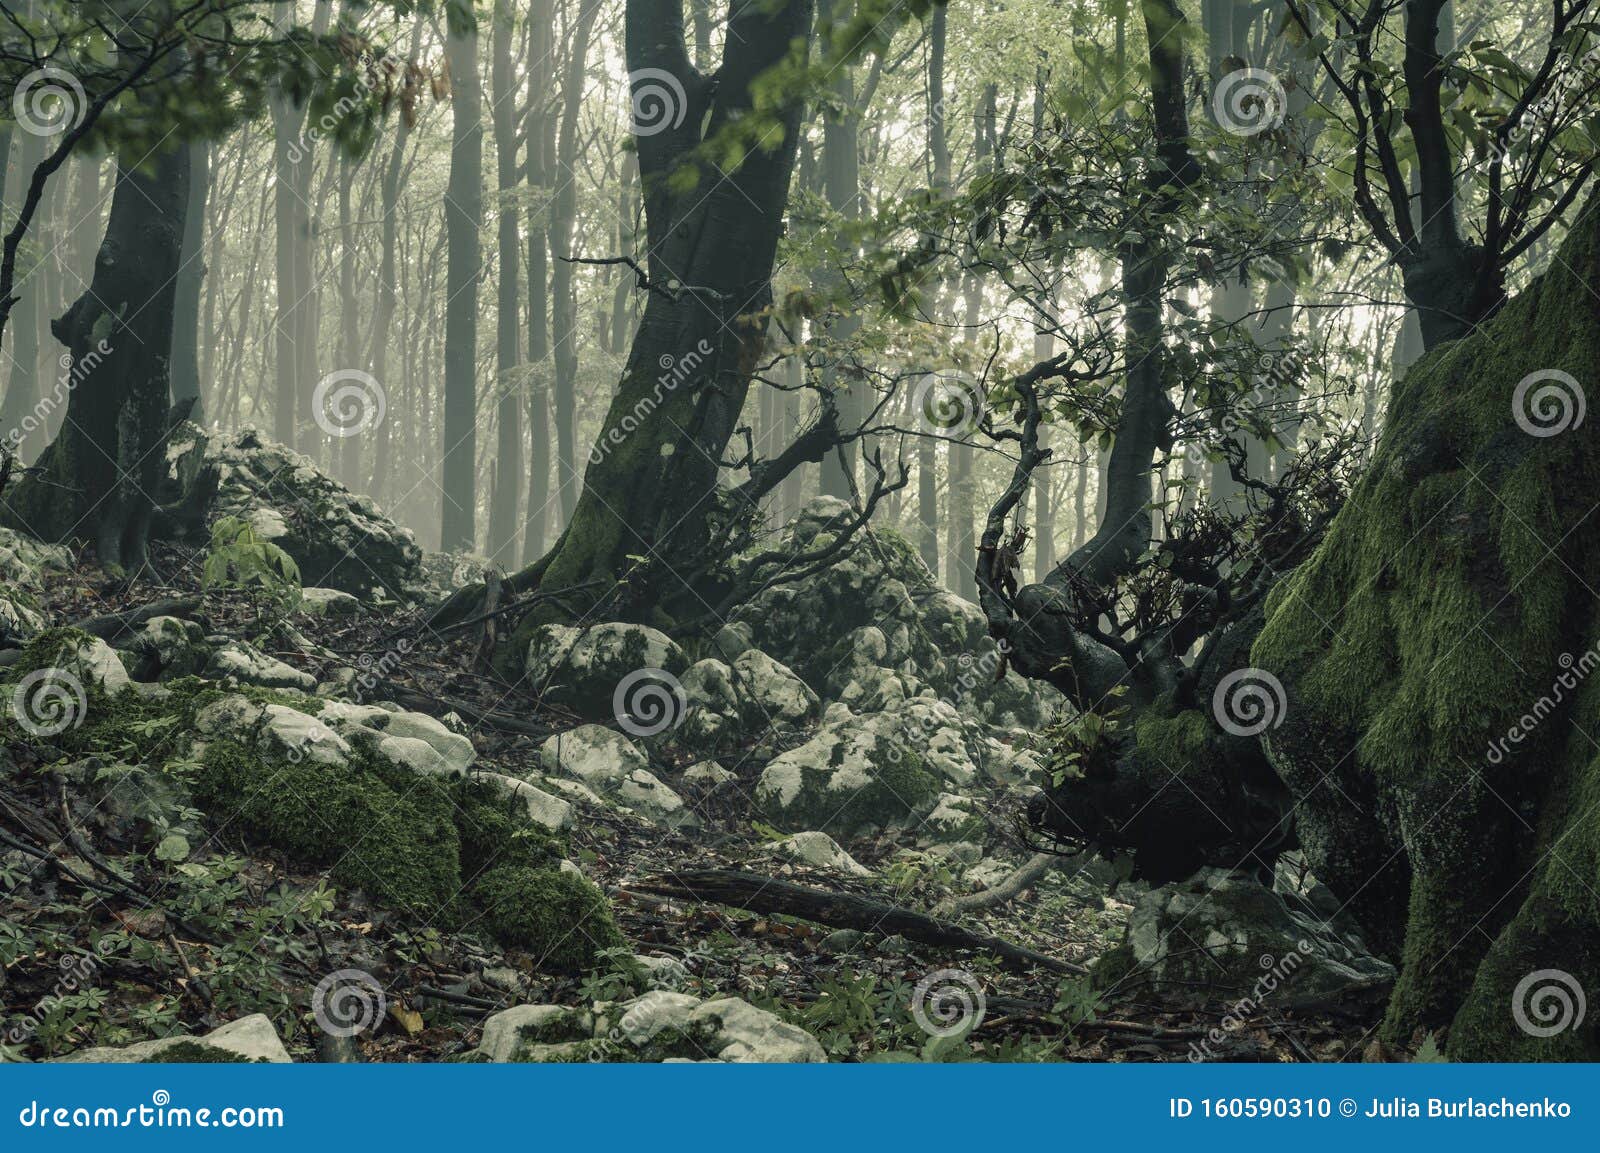 gryde indstudering opnå Mysterious foggy forest stock photo. Image of light - 160590310